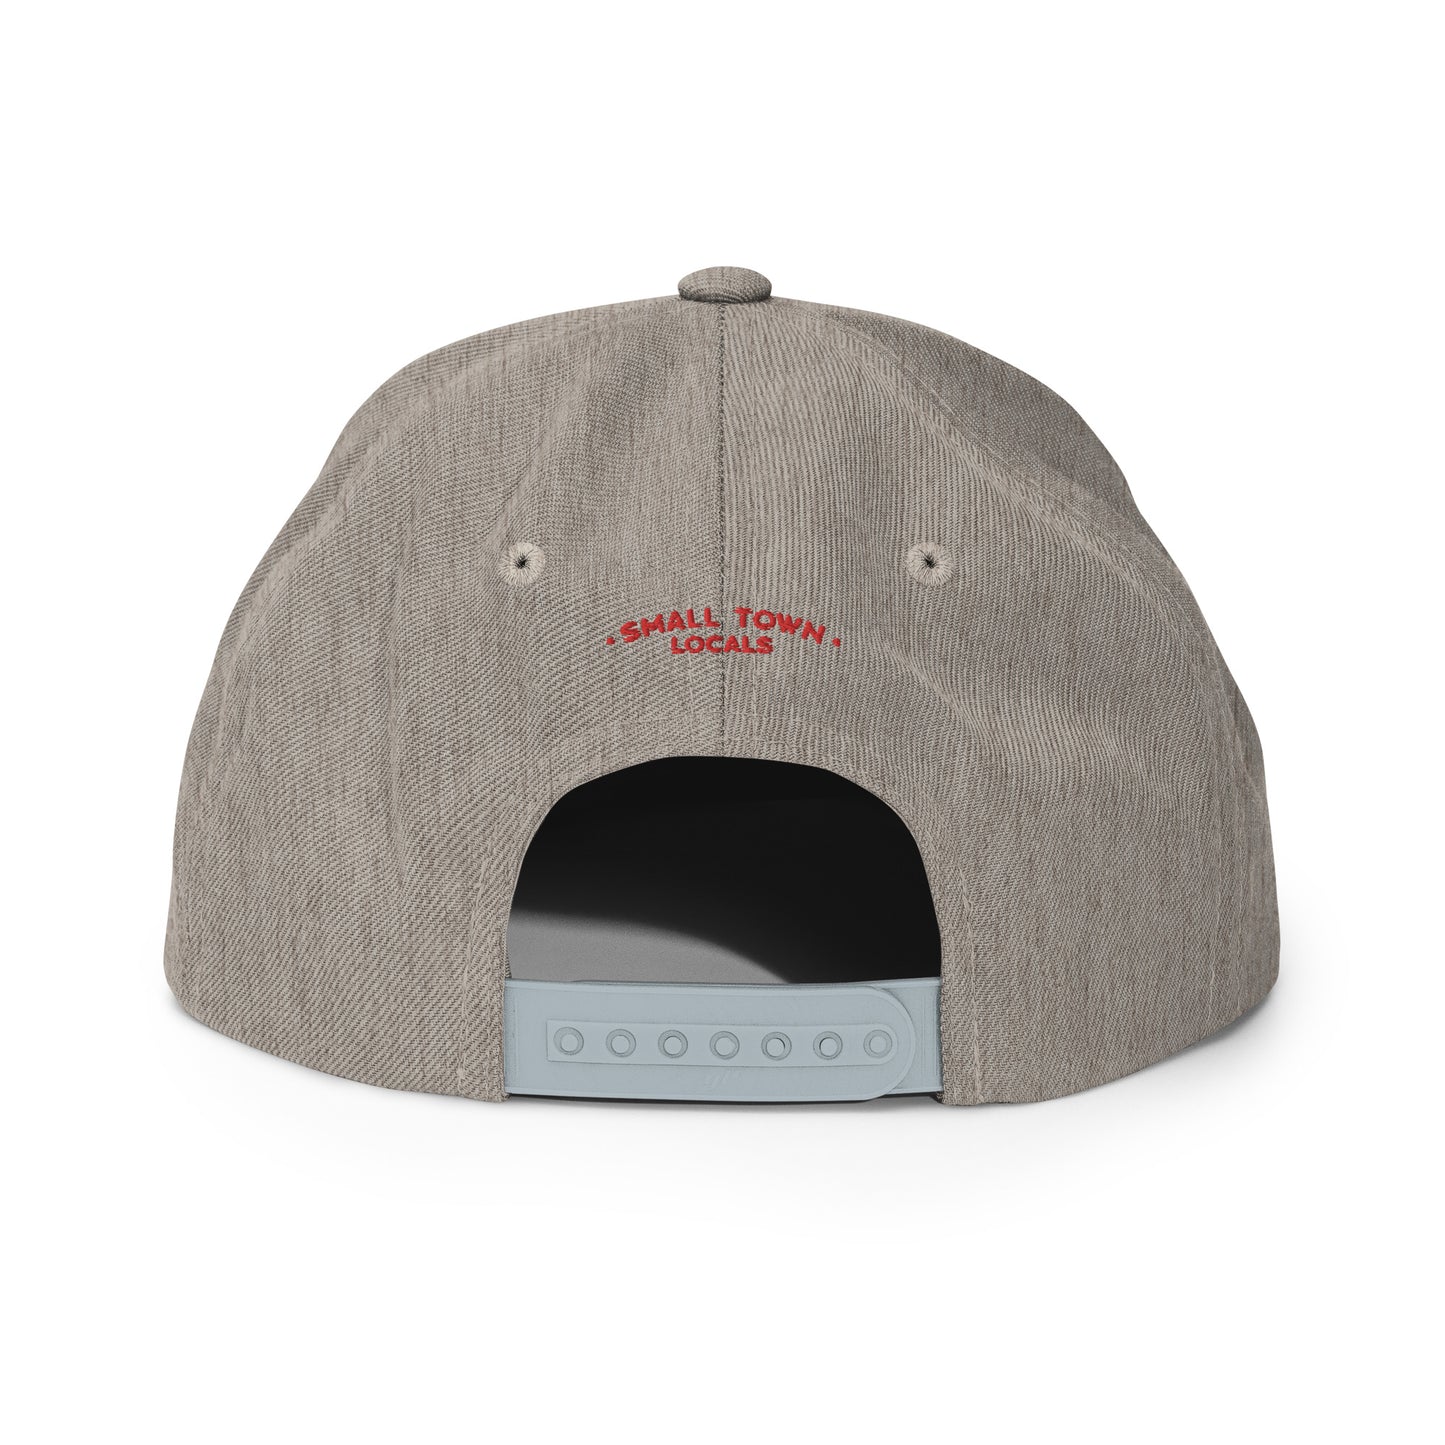 Mr. Berry - Deluxe Snapback Hat